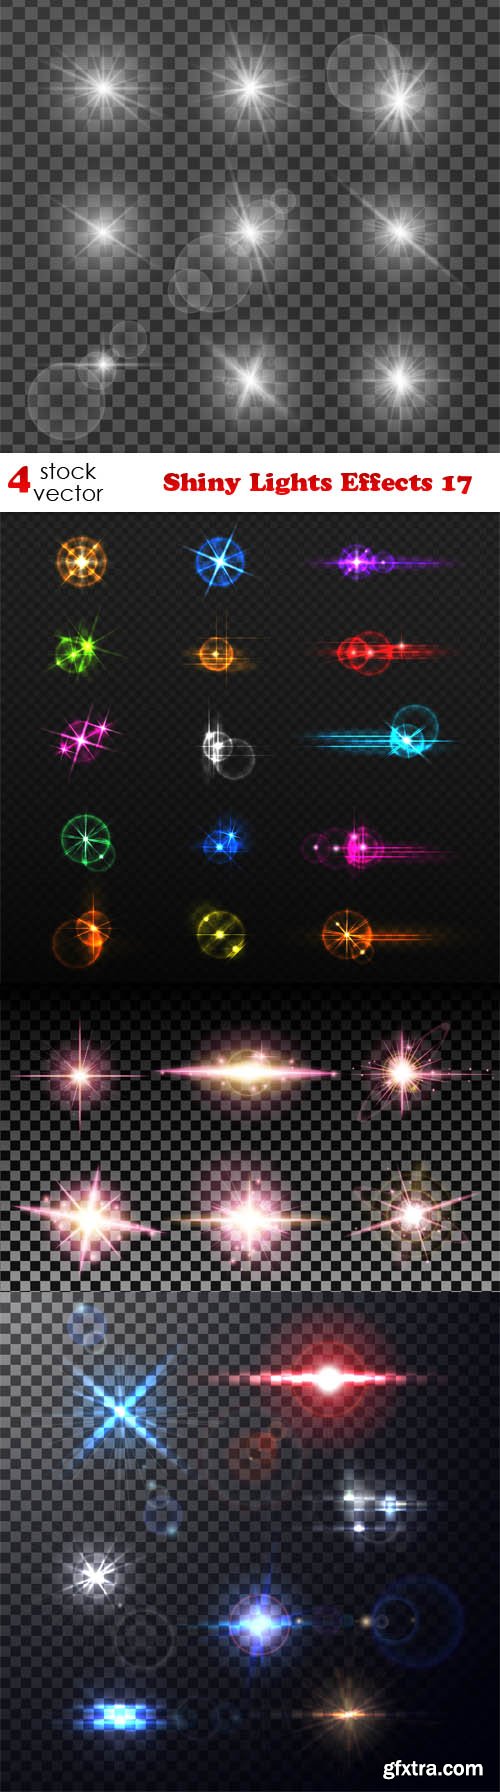 Vectors - Shiny Lights Effects 17